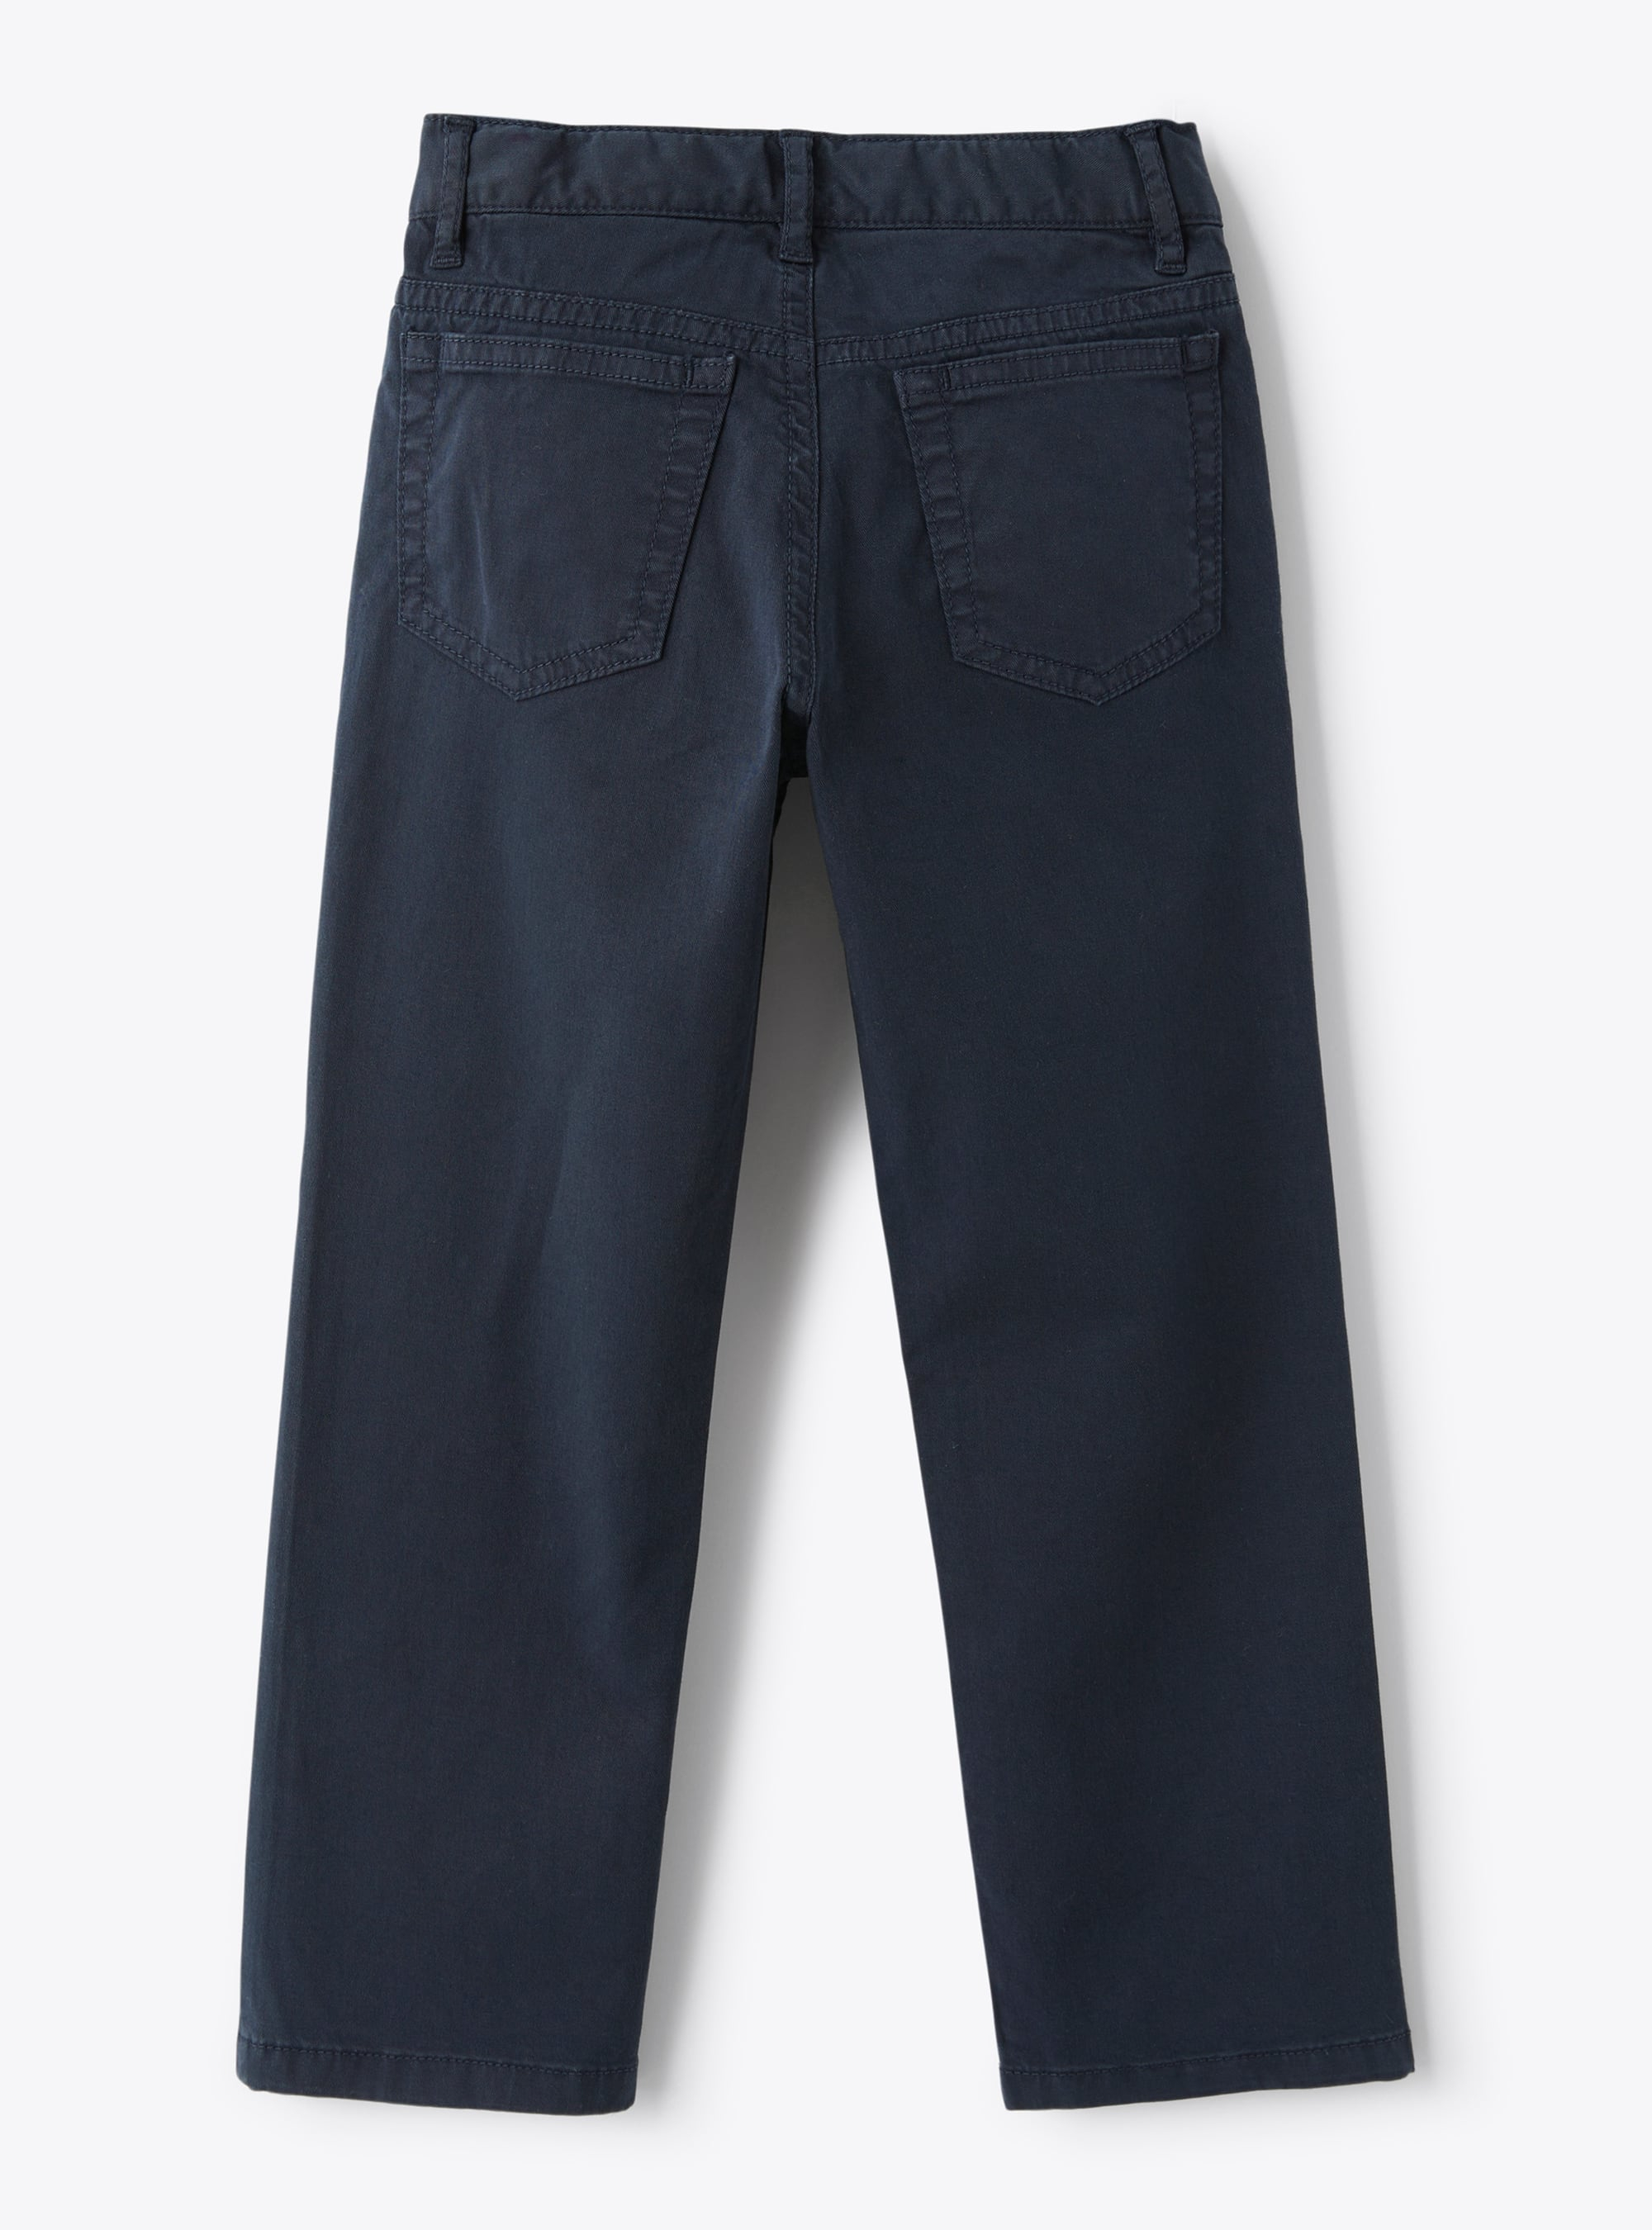 Синие брюки с пятью карманами из эластичного габардина - СИНИЙ | Il Gufo